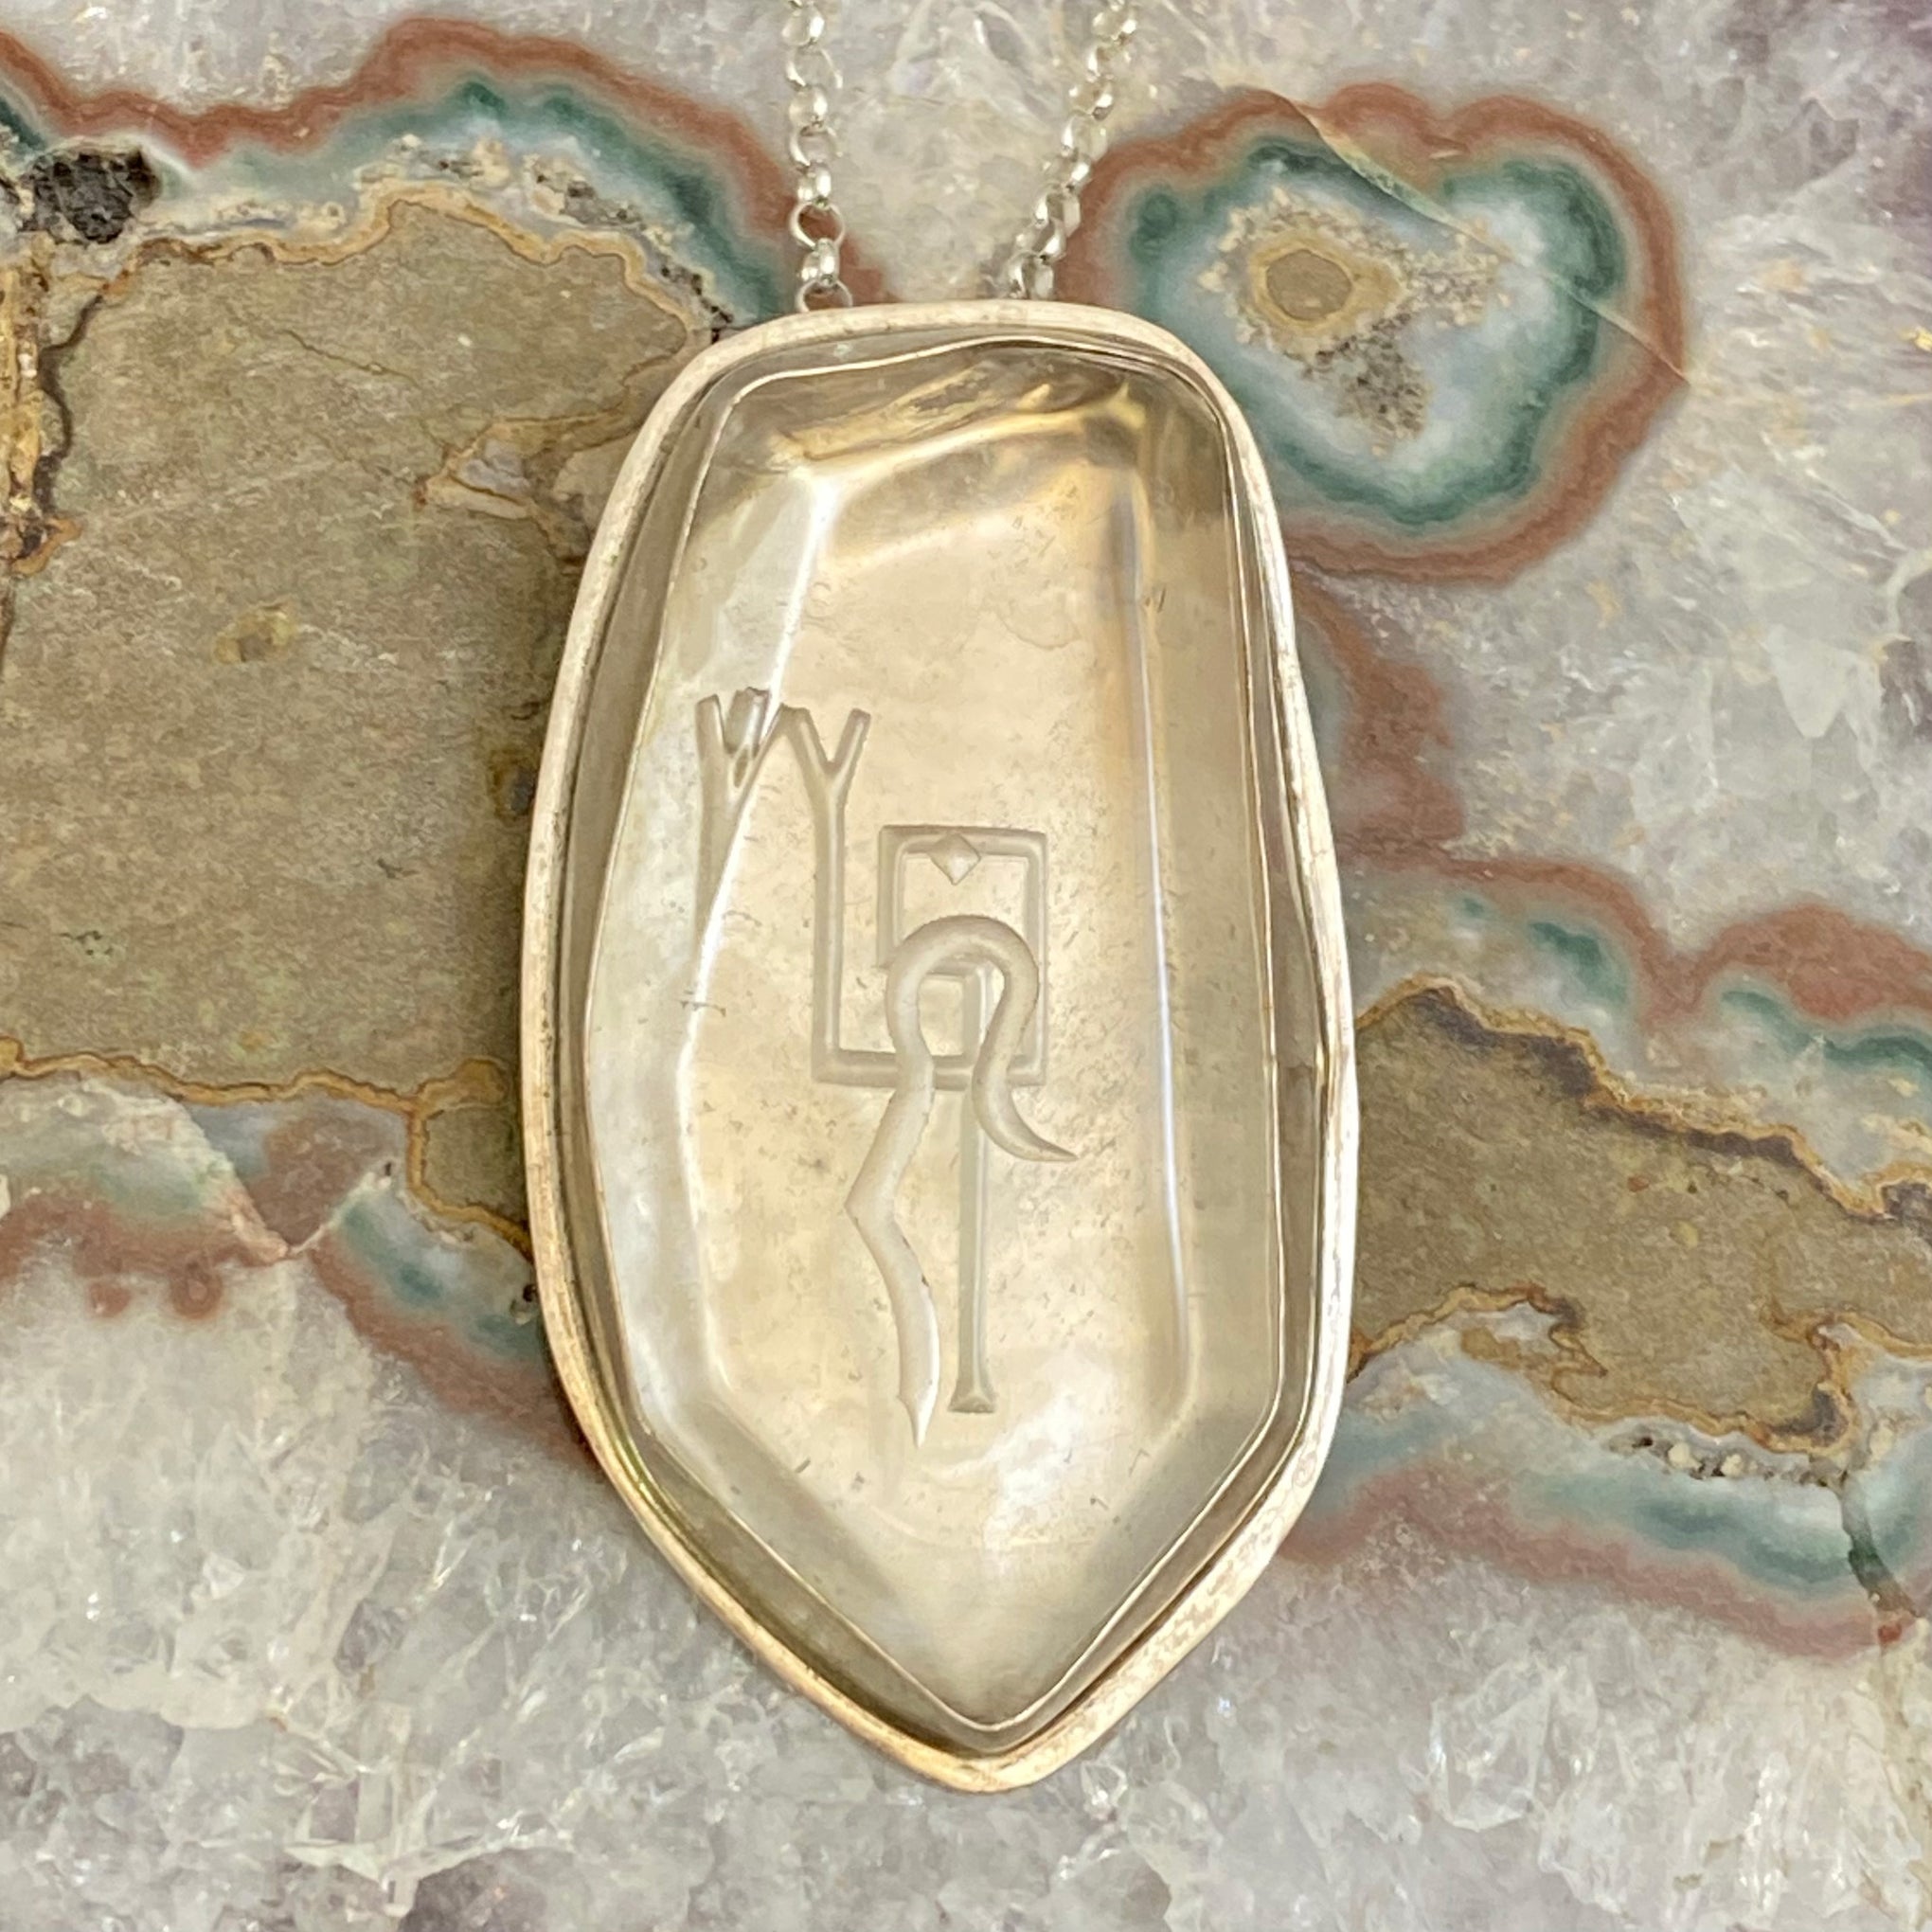 Polished Lemurian Sterling Silver Pendant with Divine Feminine & Sacred Masculine Symbols